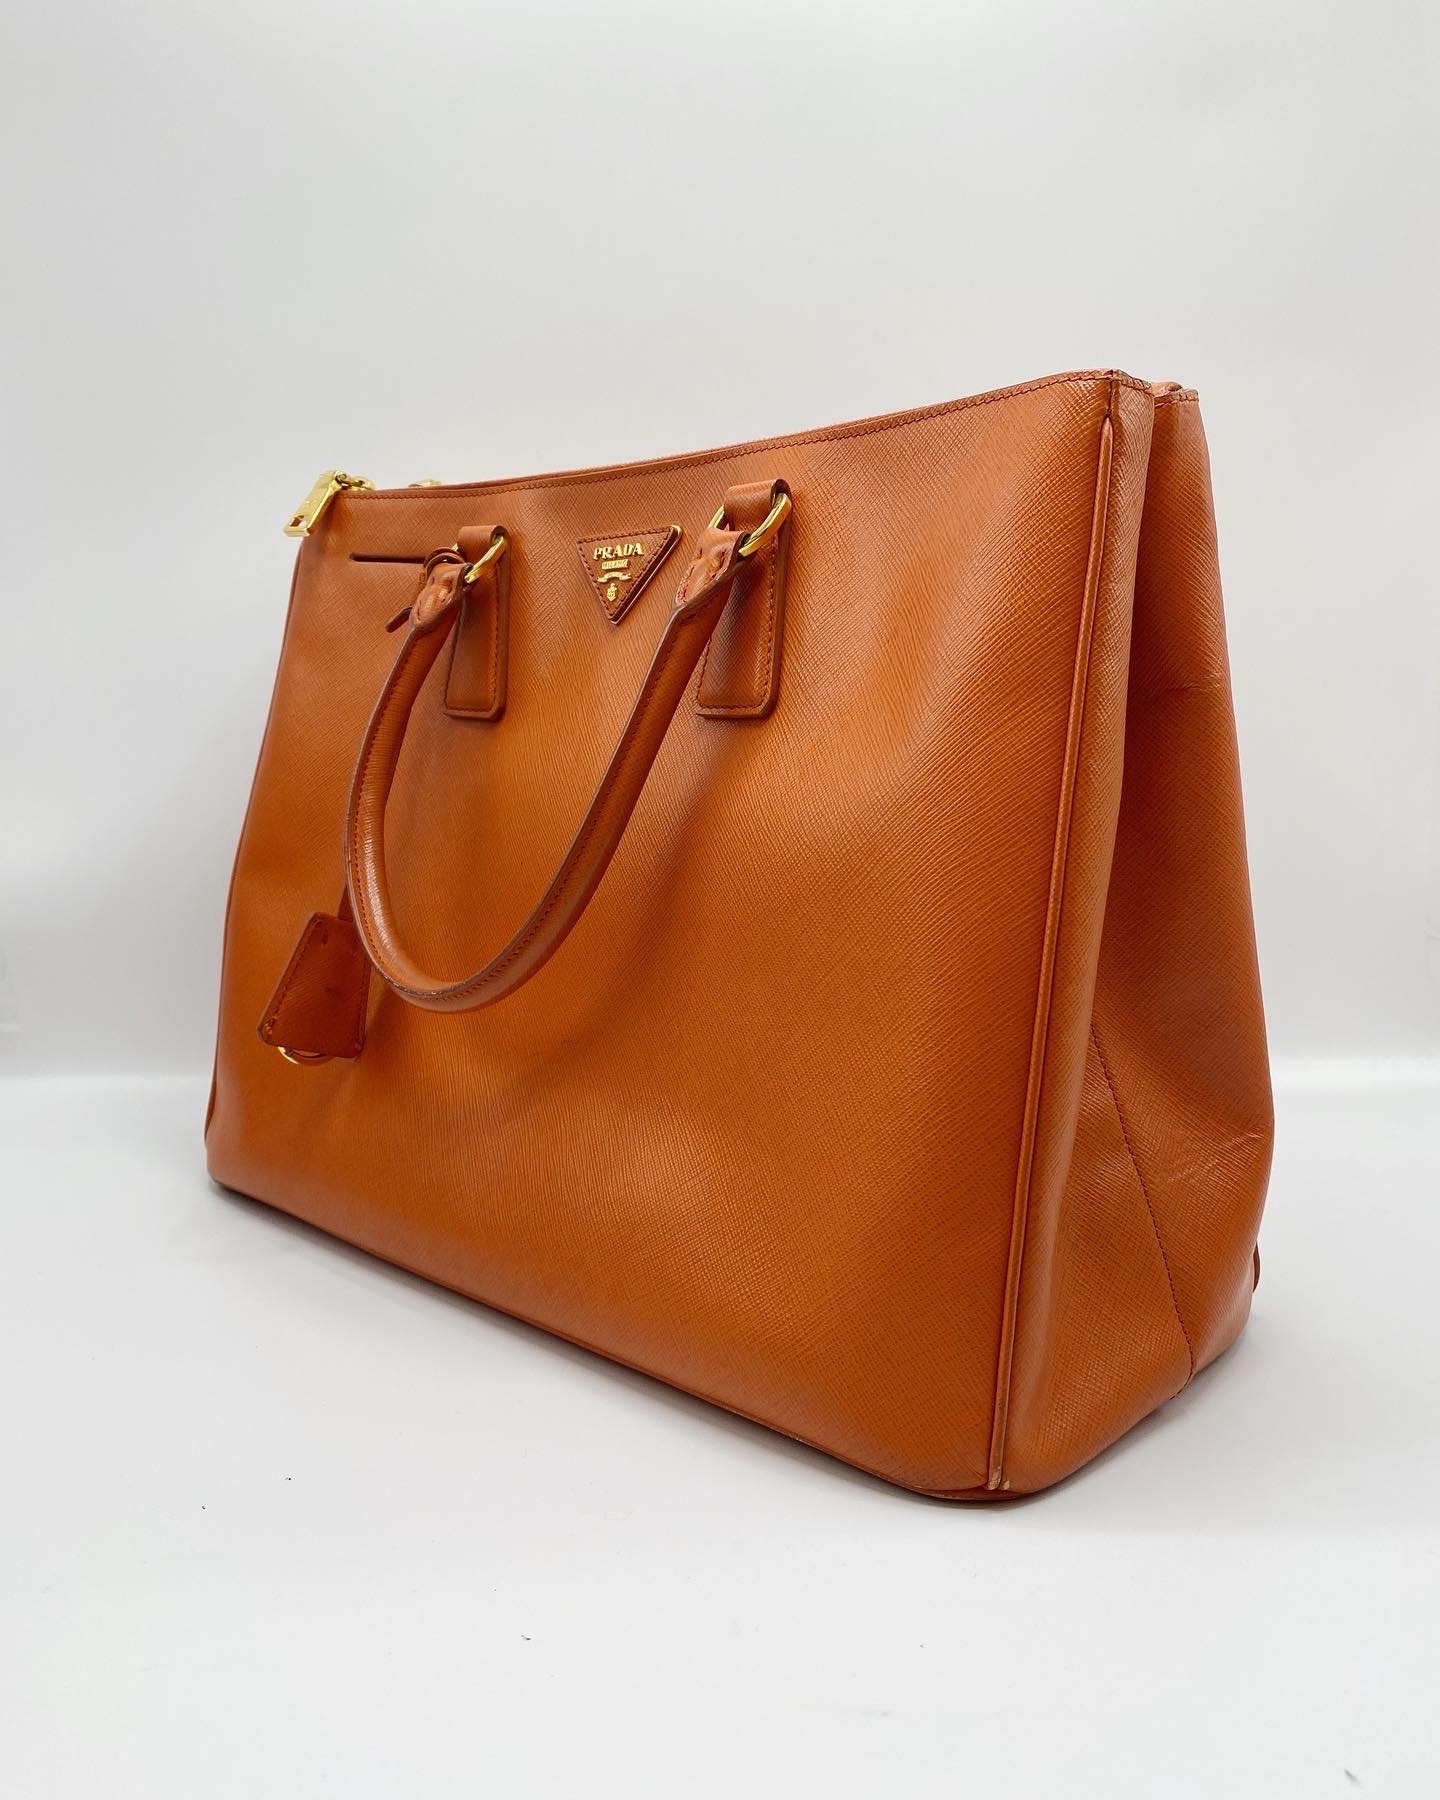 Prada Papaya Saffiano Lux Leather Double Zip Large Tote Bag BN1786